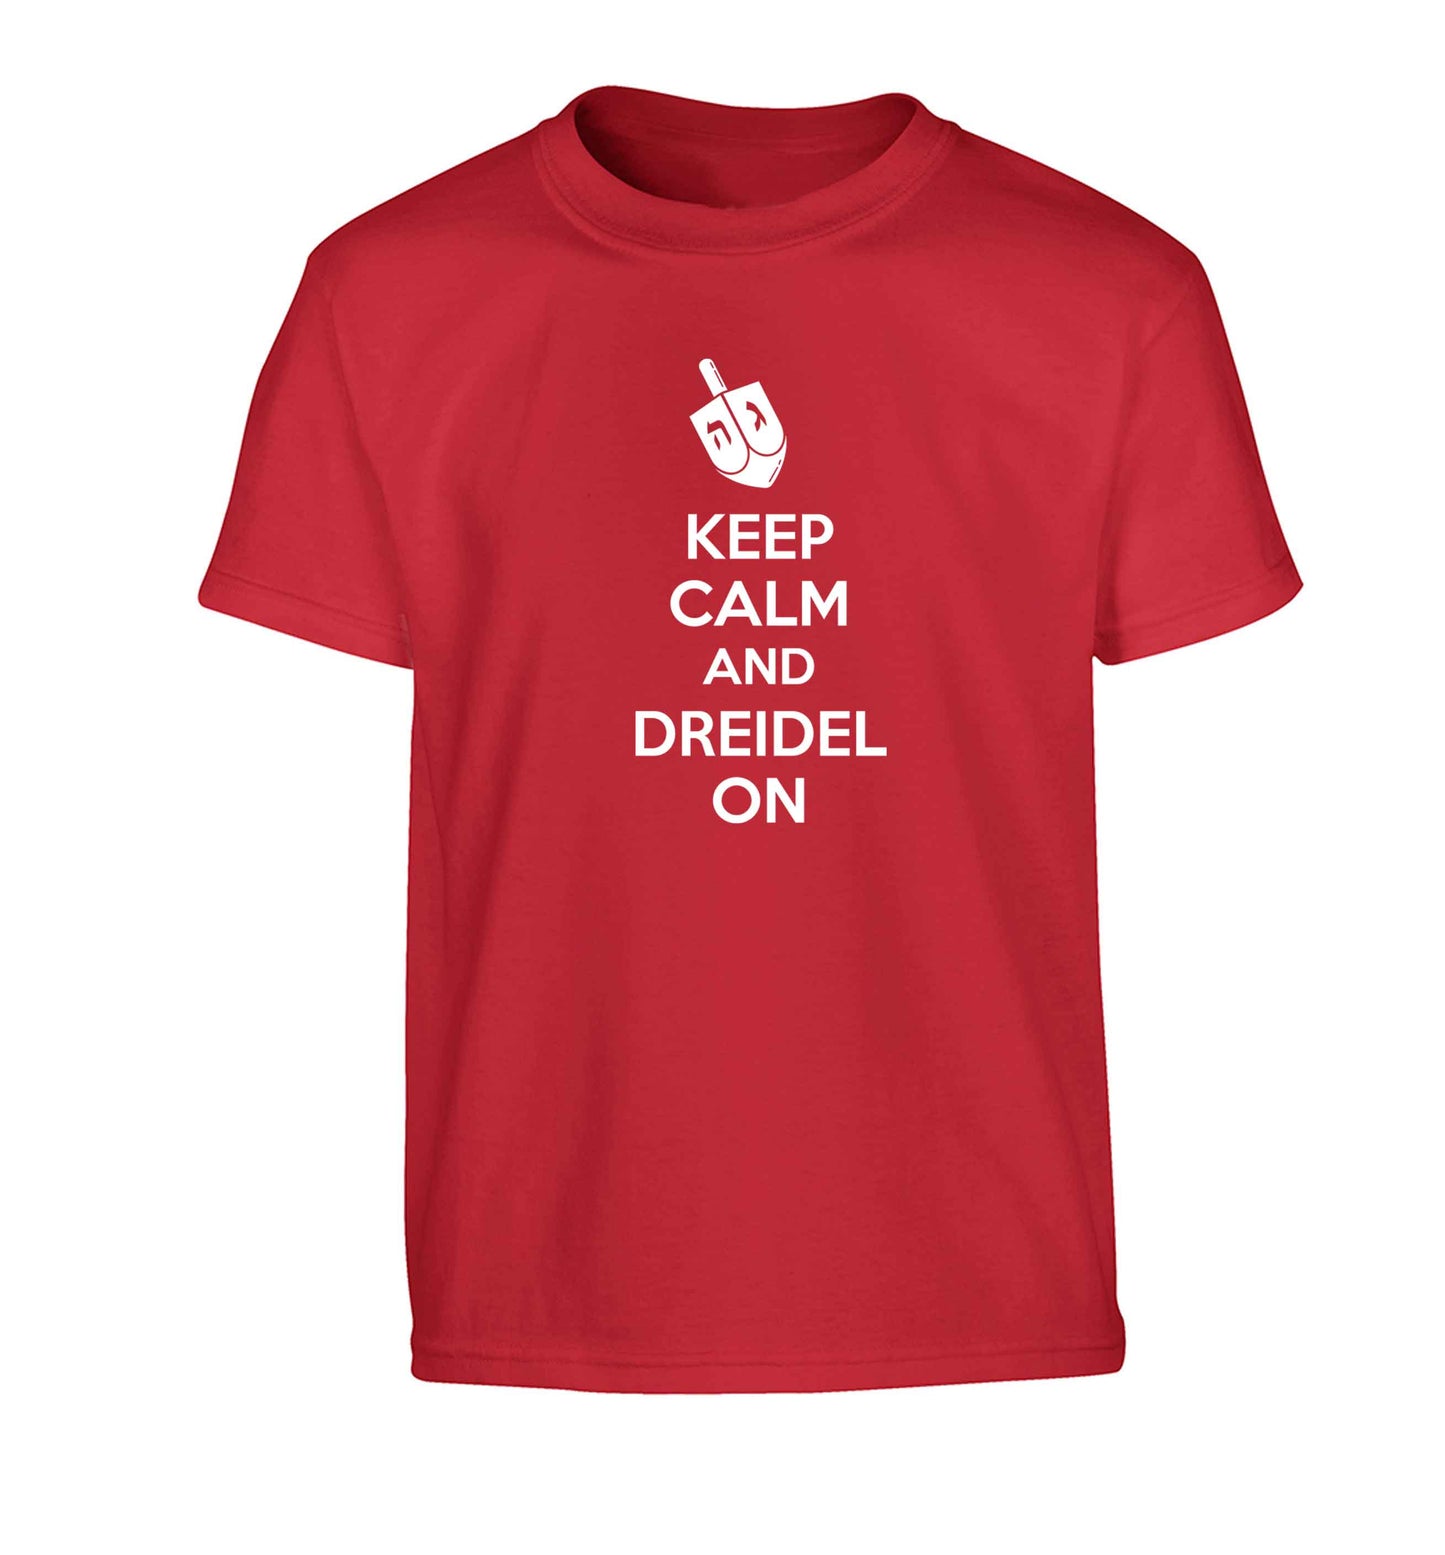 Keep calm and dreidel on Children's red Tshirt 12-13 Years